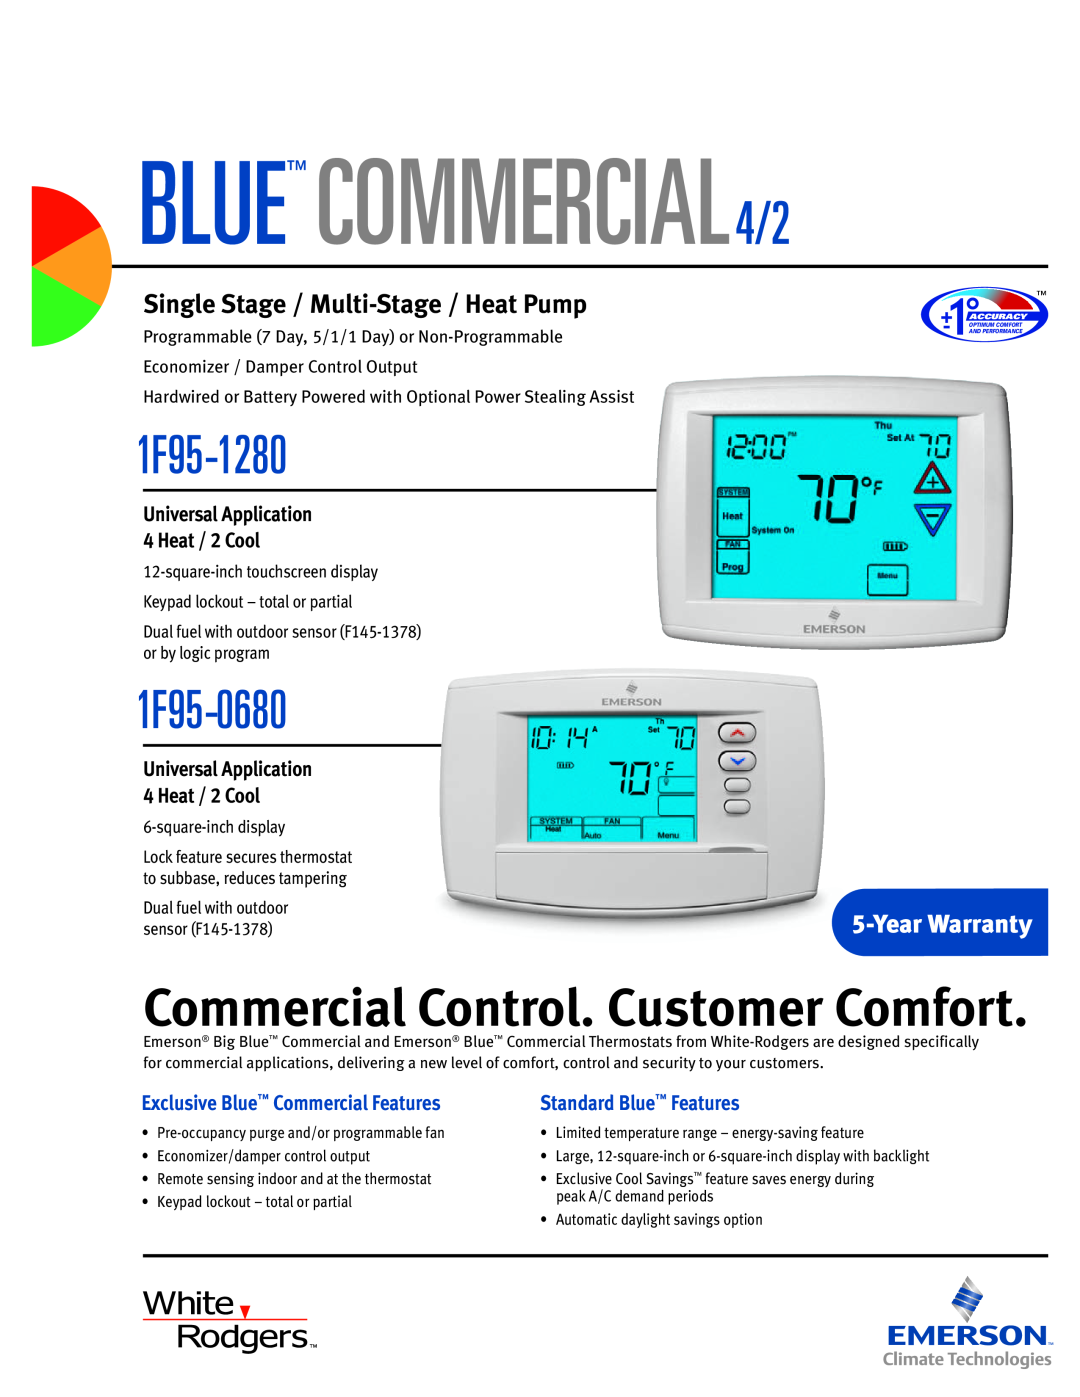 Emerson 1F95-0680 warranty BLUE COMMERCIAL4/2, 1F95-1280, Commercial Control. Customer Comfort, YearWarranty 